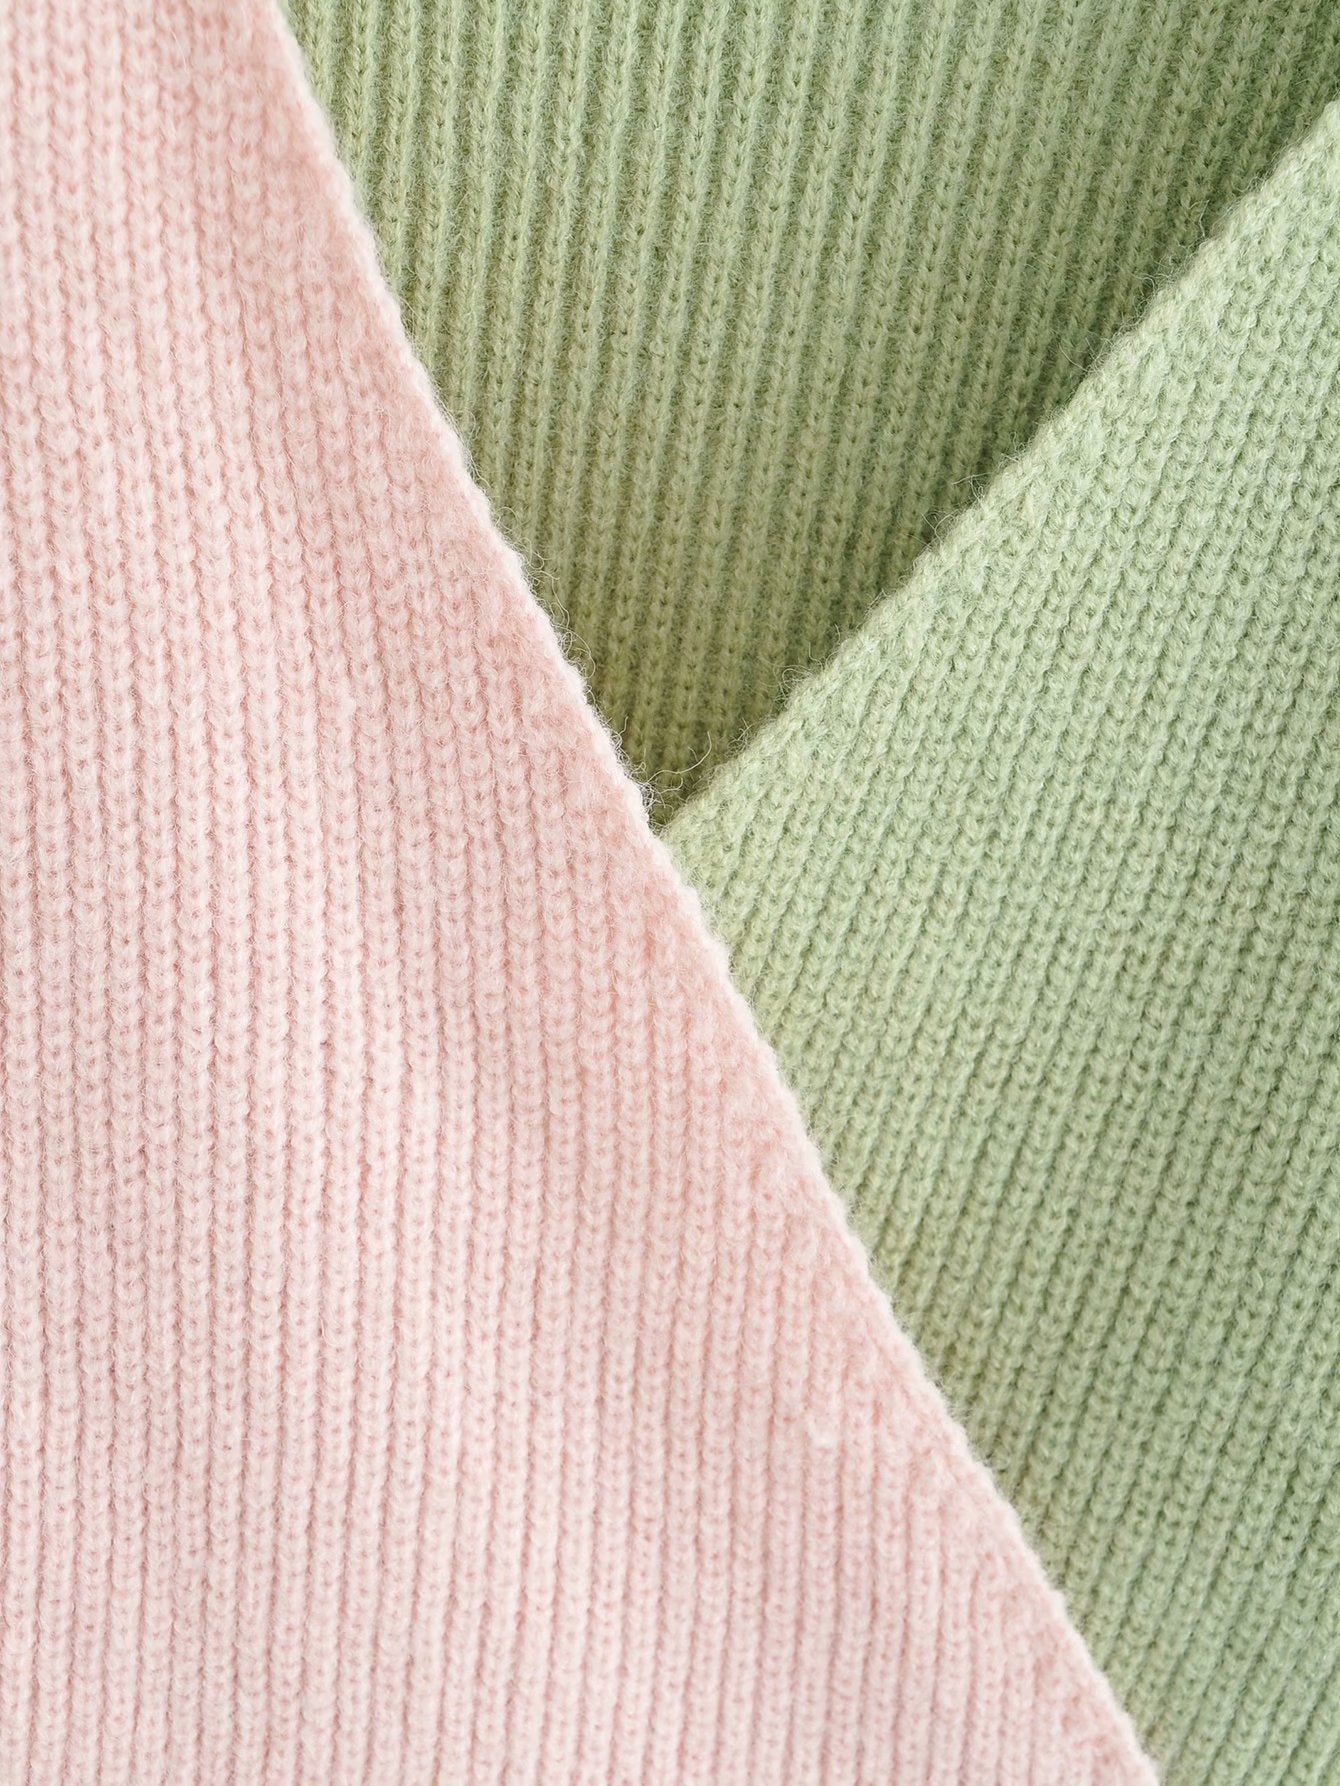 NTG Fad Hoodies & Sweatshirts Contrast Paneled Cross Tie Long Sleeve Loose Knit Sweater Sweater